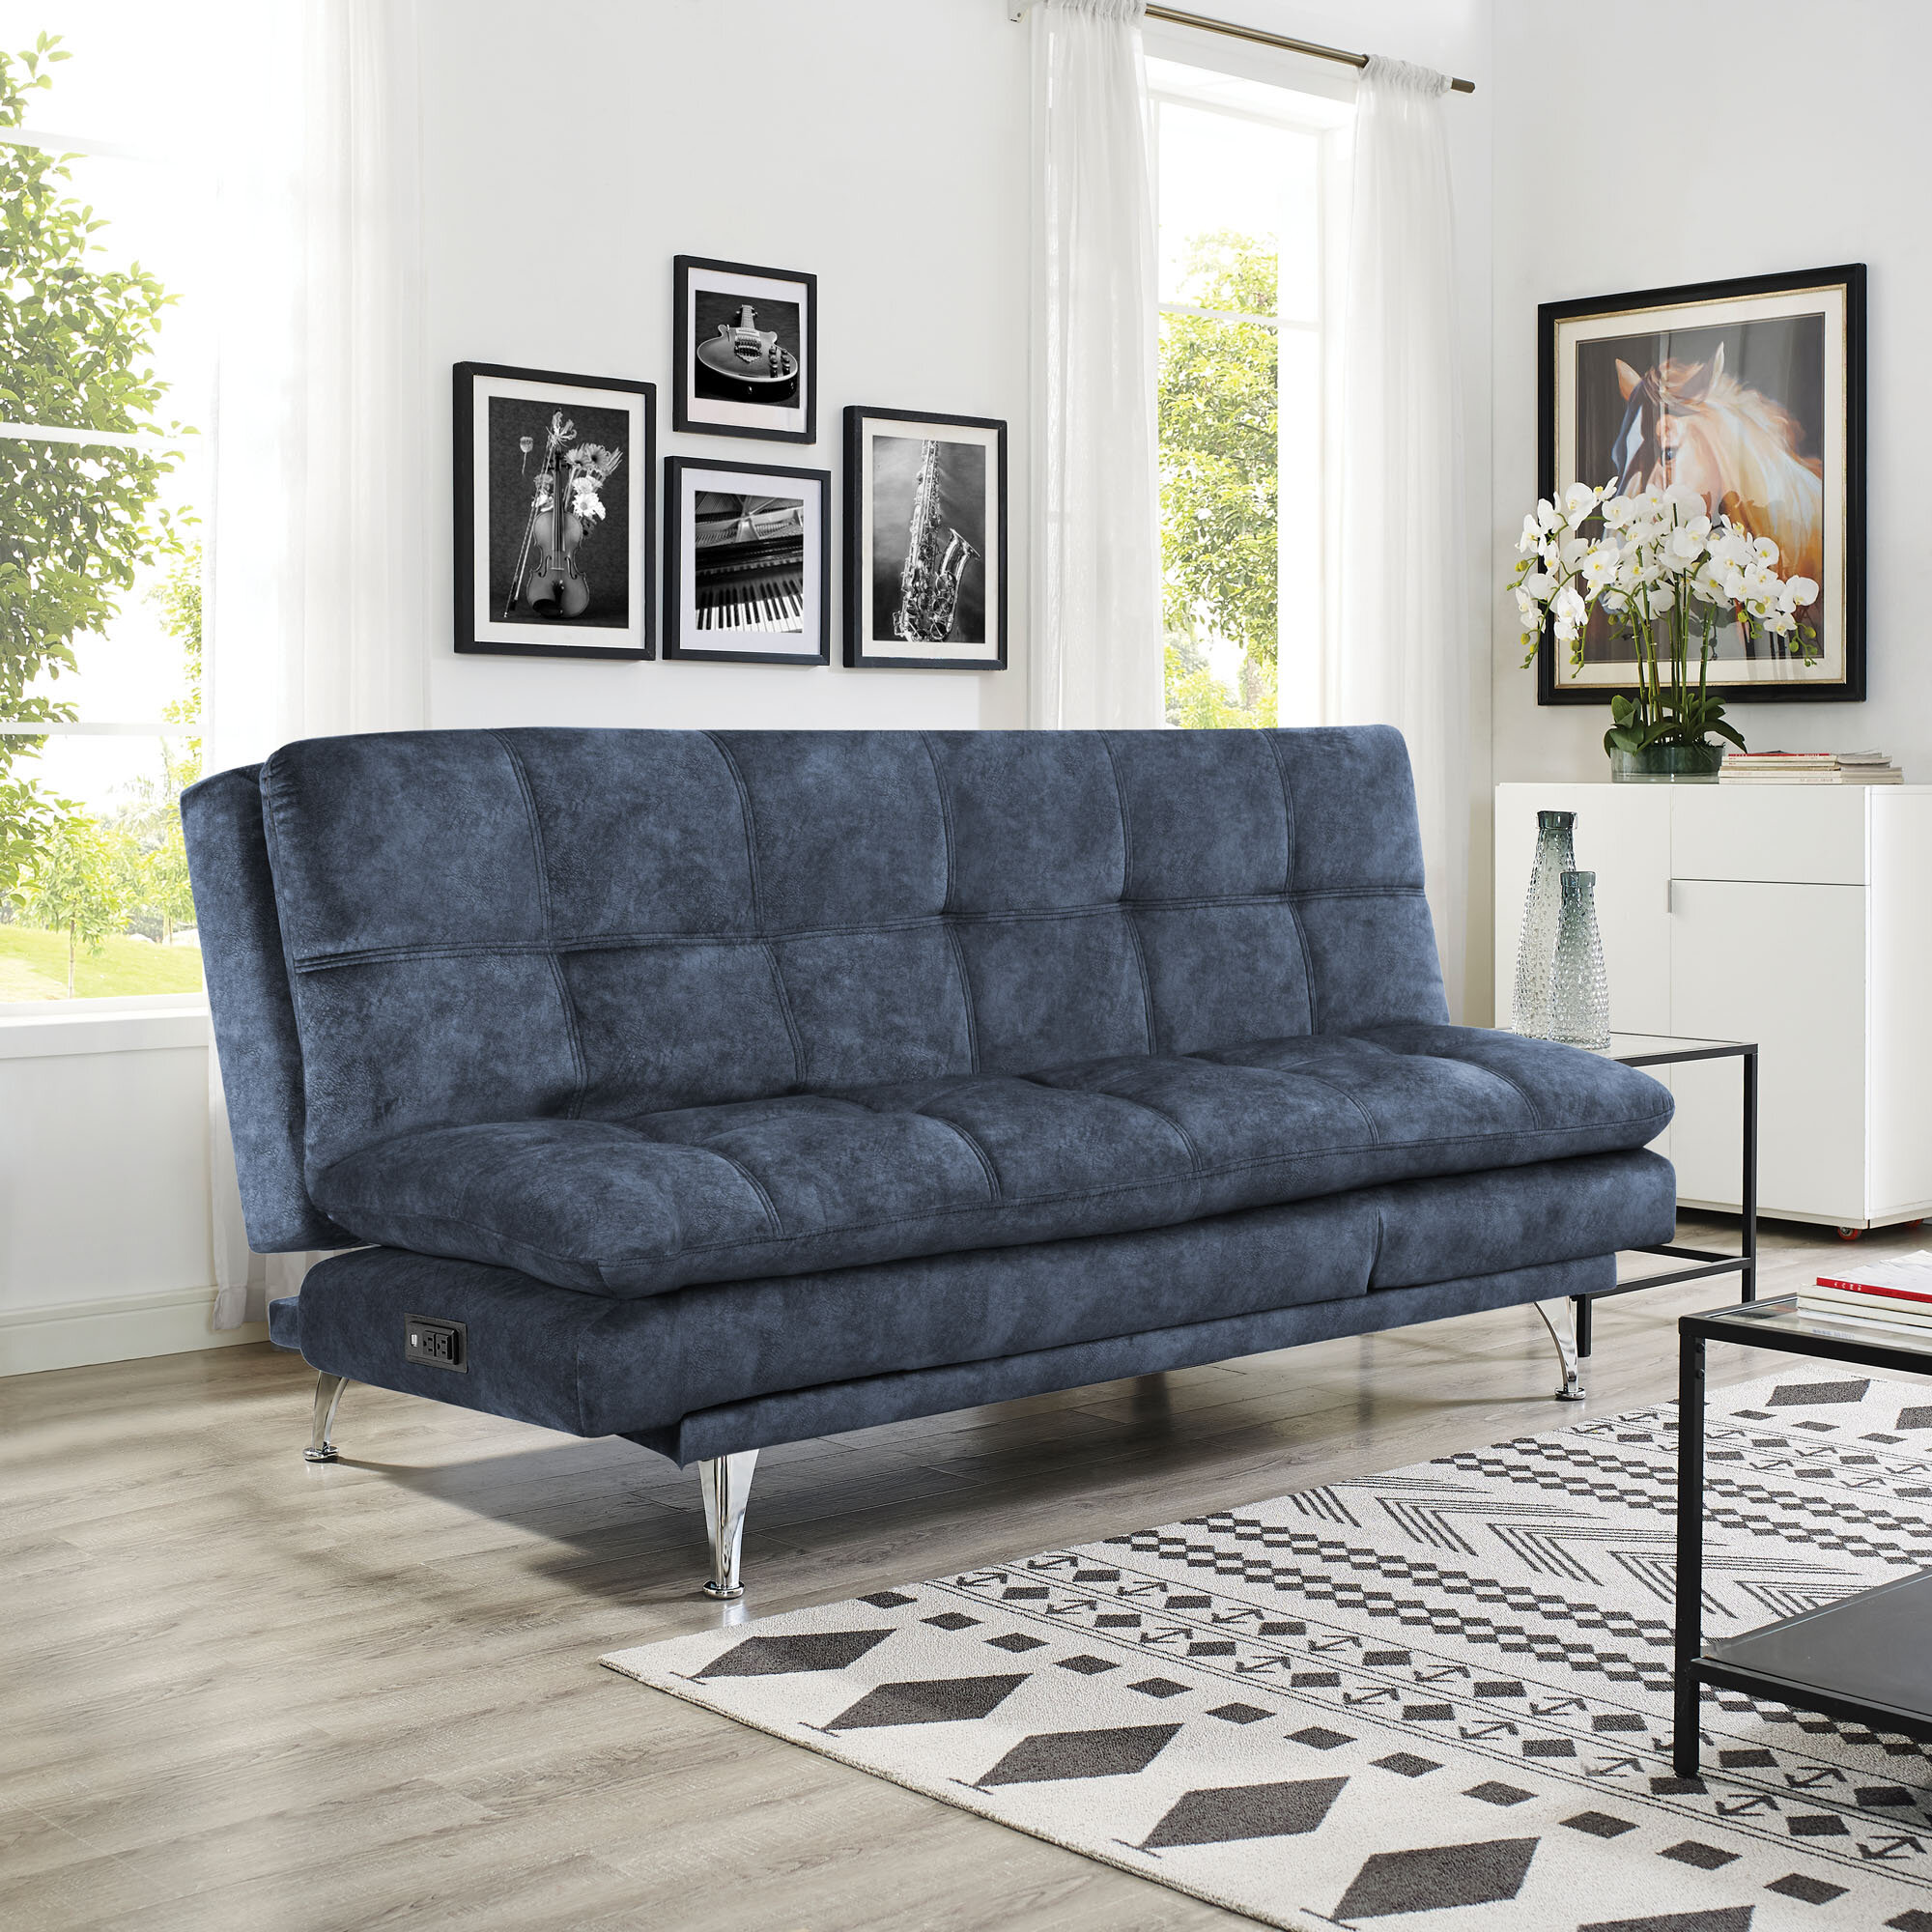 Serta Reuben 787 Tufted Multi Functional Convertible Sleeper Sofa 